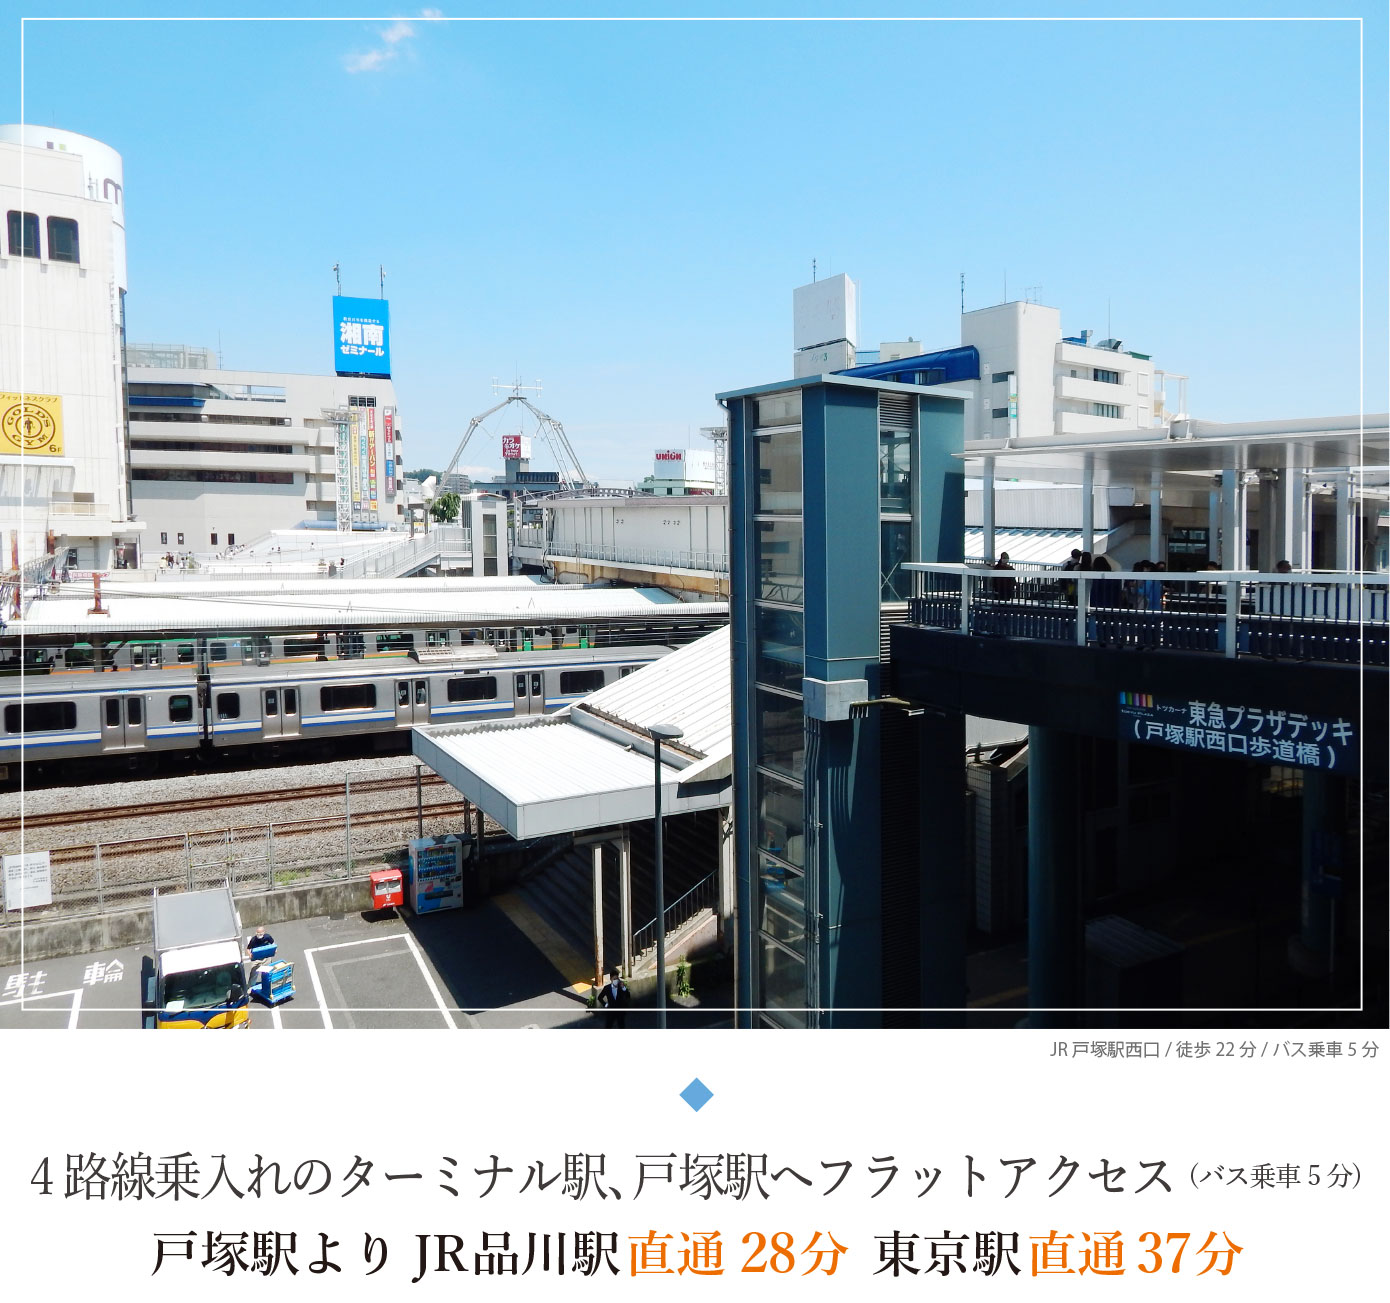 JR戸塚駅へ フラットアクセス